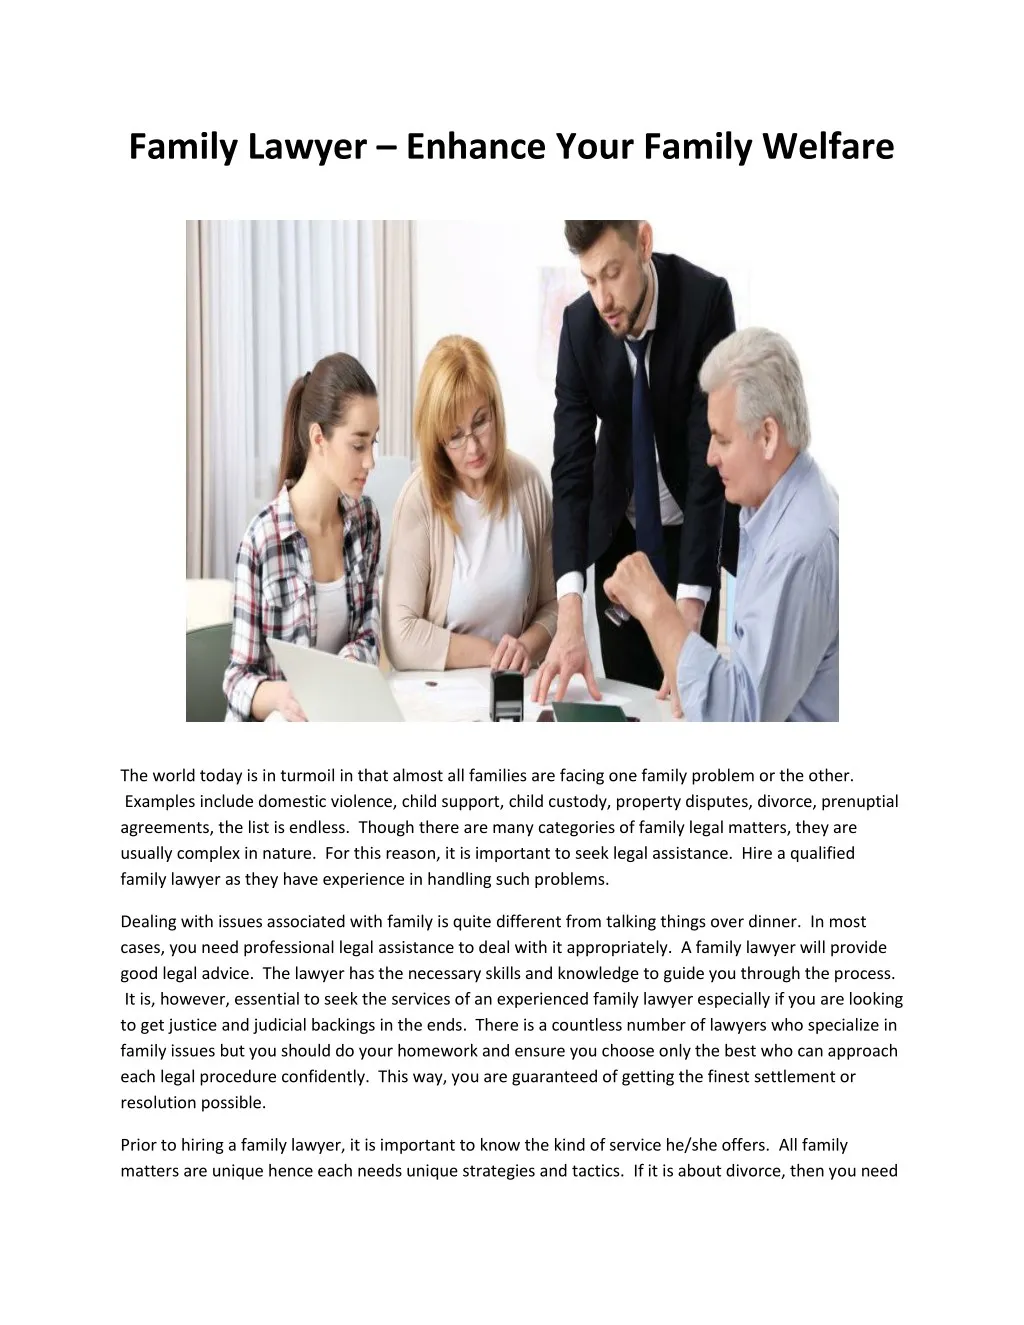 family lawyer enhance your family welfare